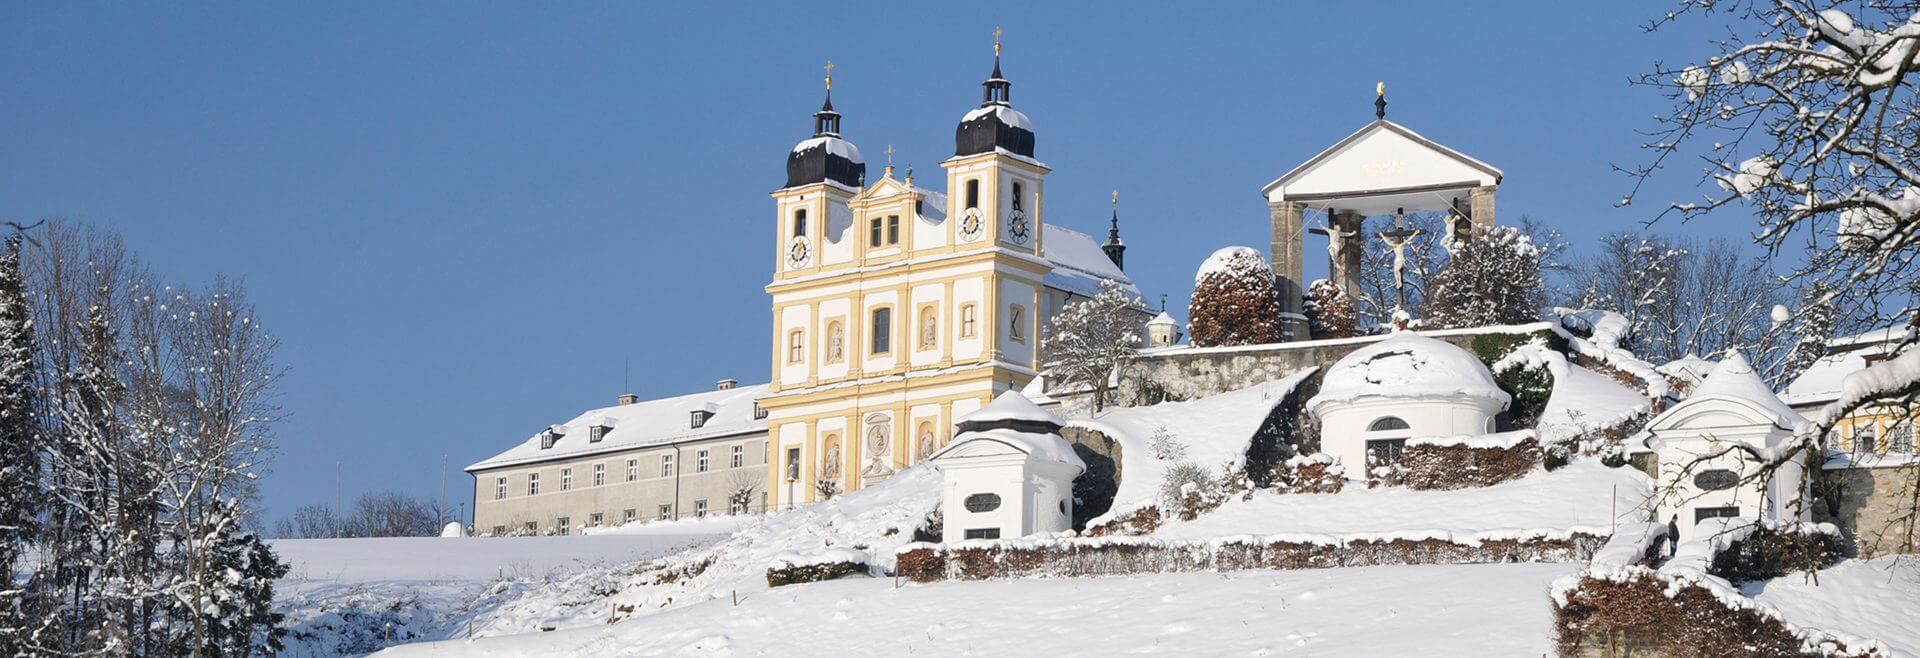 Wallfahrtskirche Maria Plain im Winter